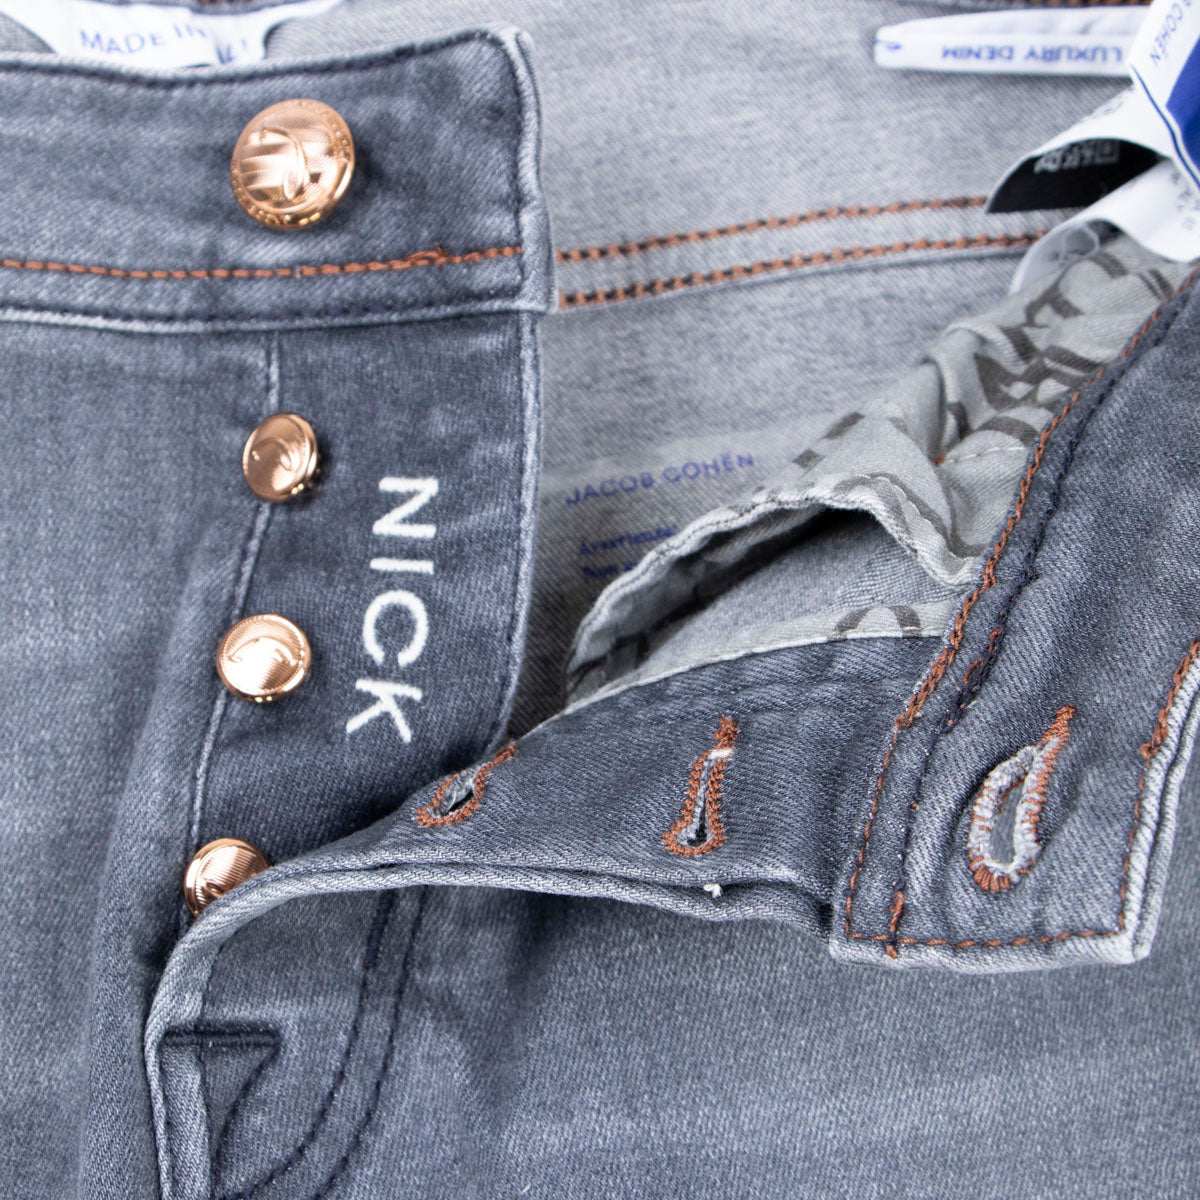 Washed Grey ‘Nick’ Stretch Slim Fit Jeans  Jacob Cohën   